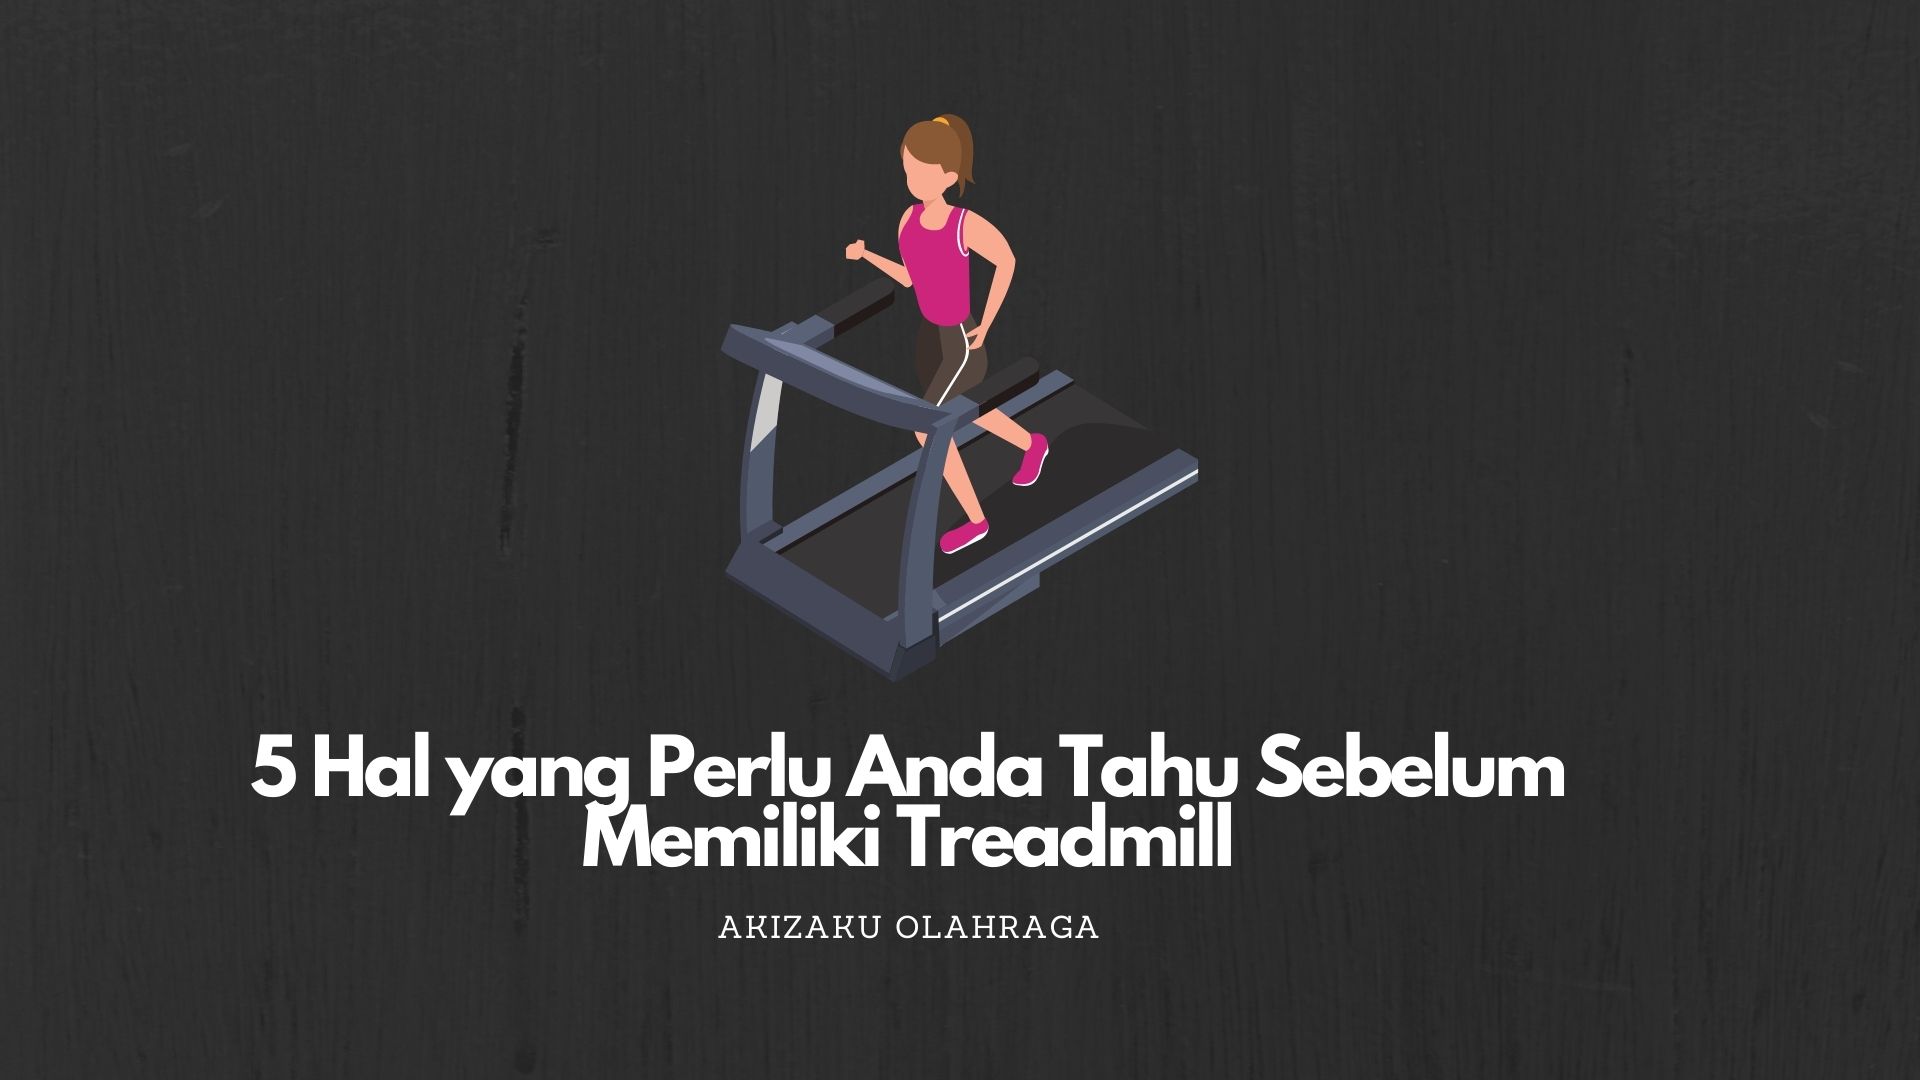 5-hal-yang-perlu-anda-tahu-sebelum-memiliki-treadmill